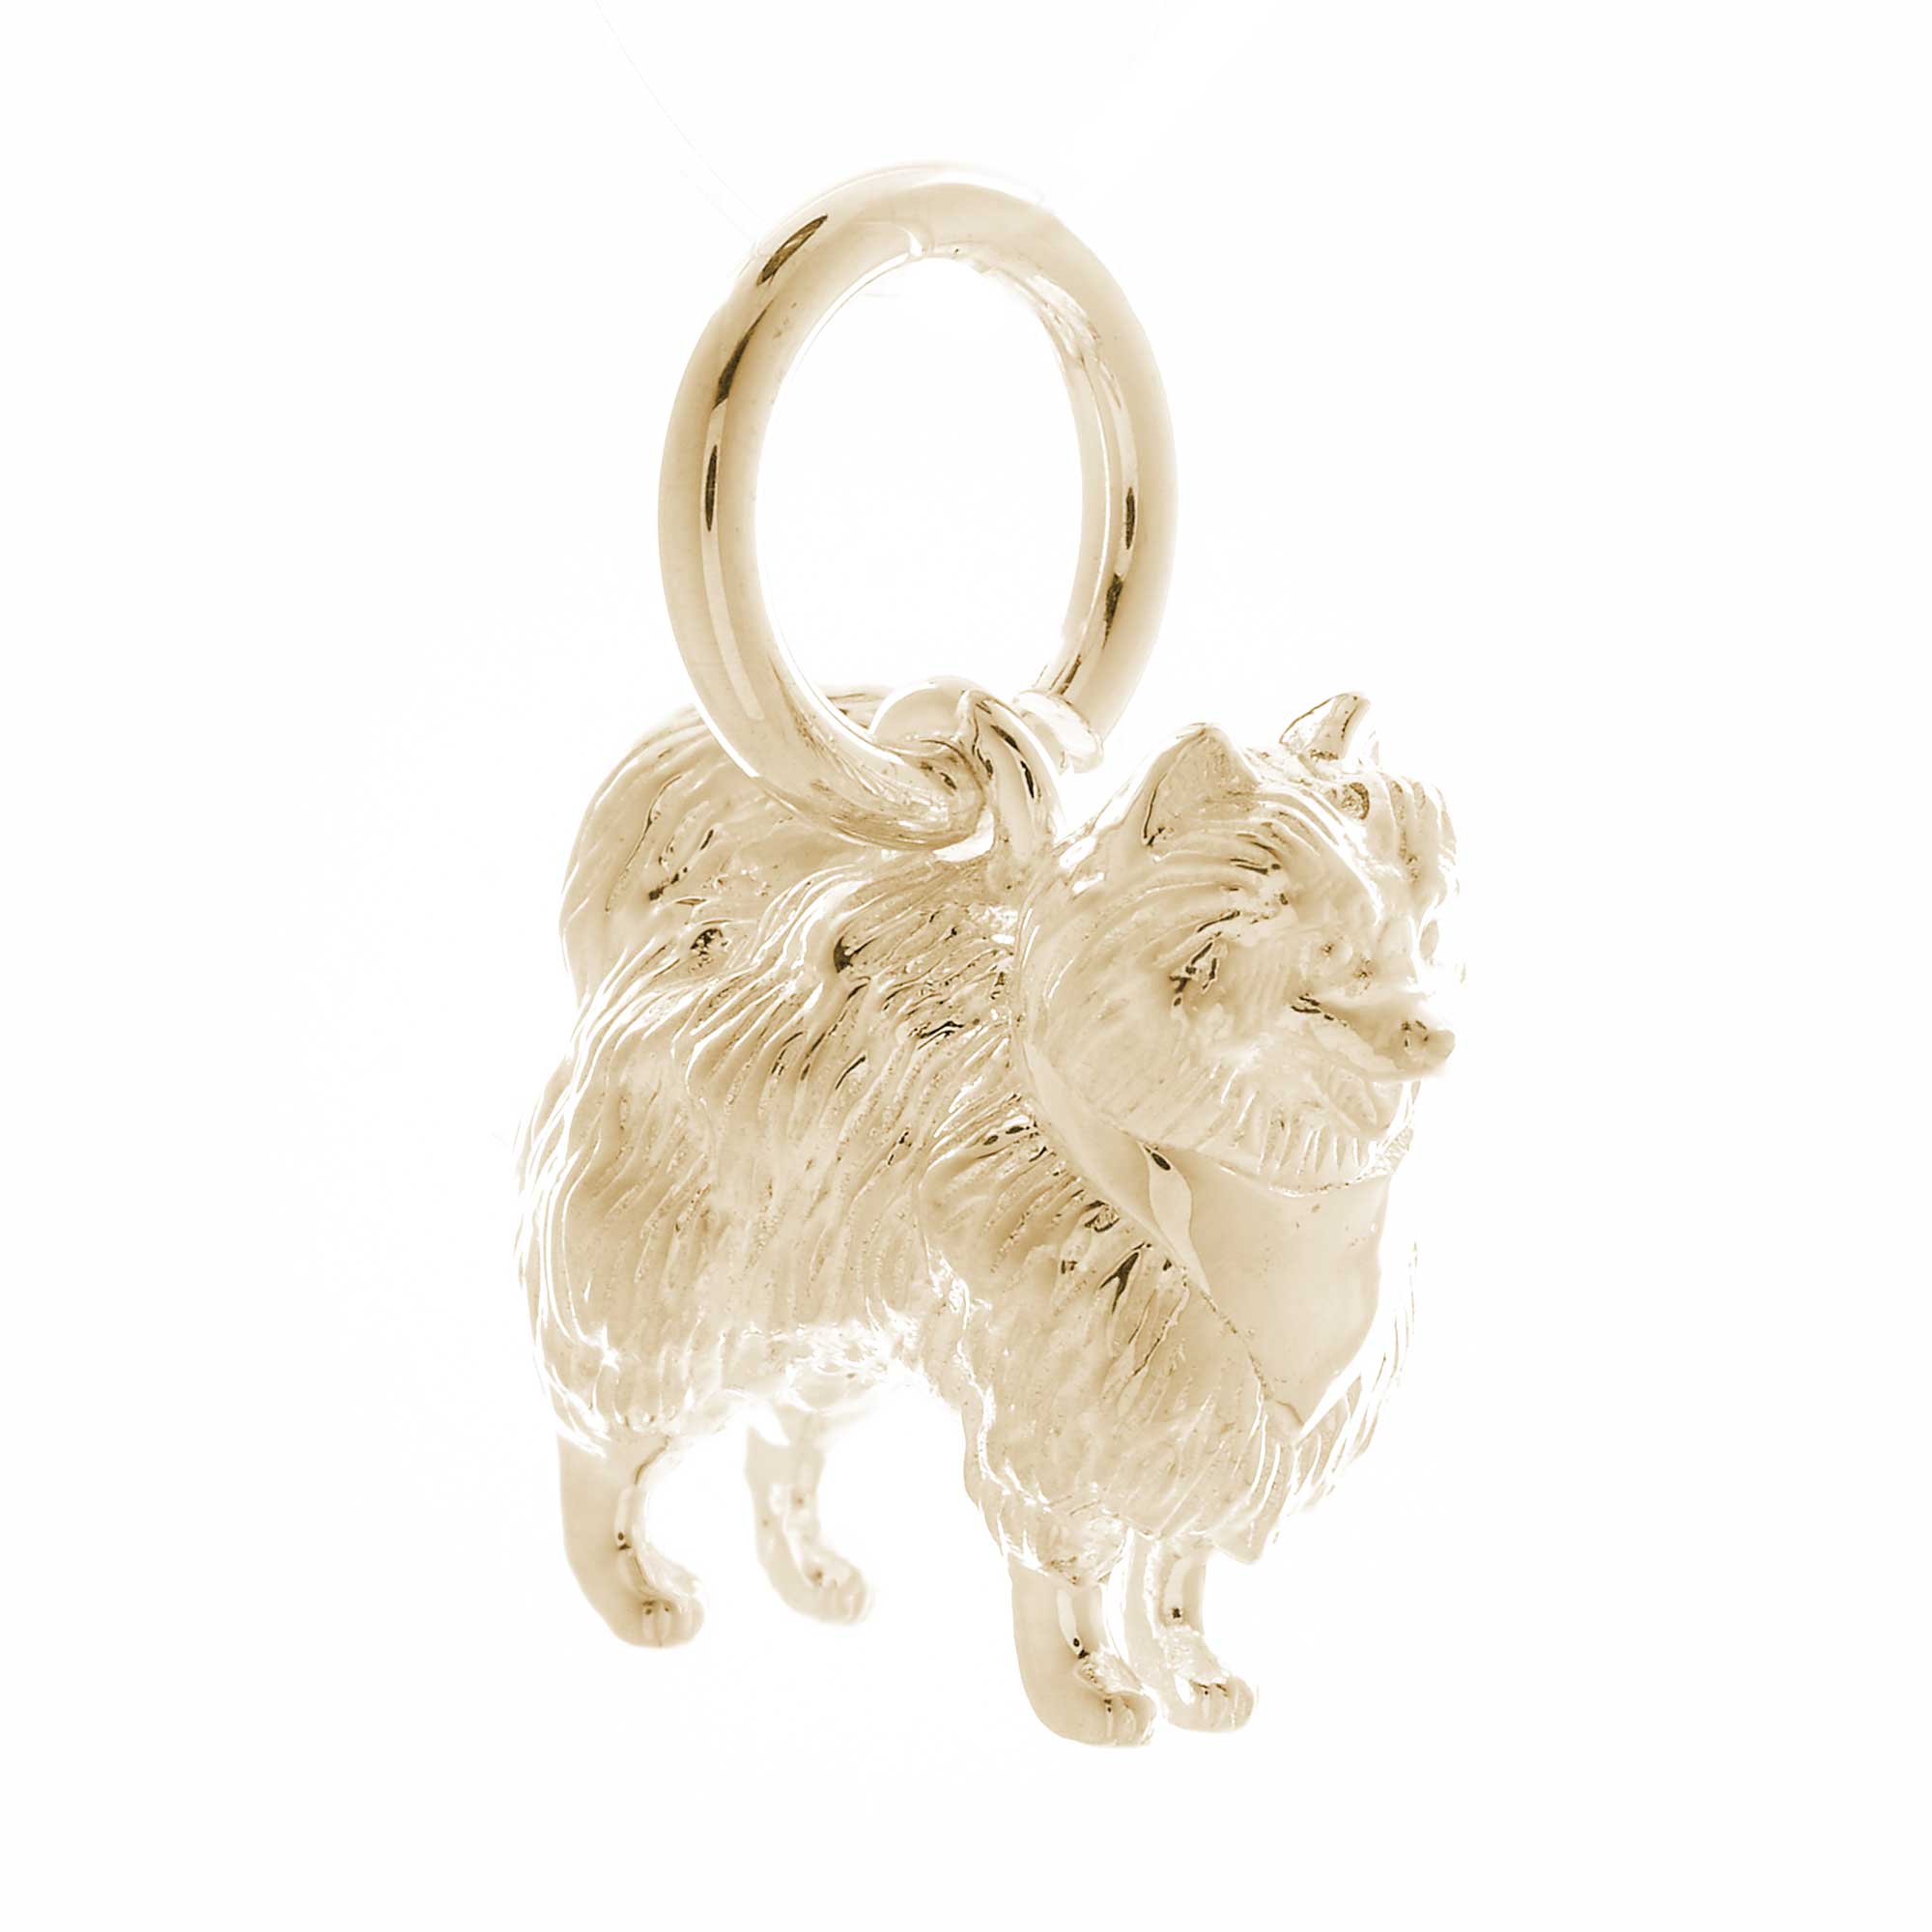 solid 9k gold pomeranian dog charm for bracelet necklace gift for pet loss scarlett jewellery Brighton UK